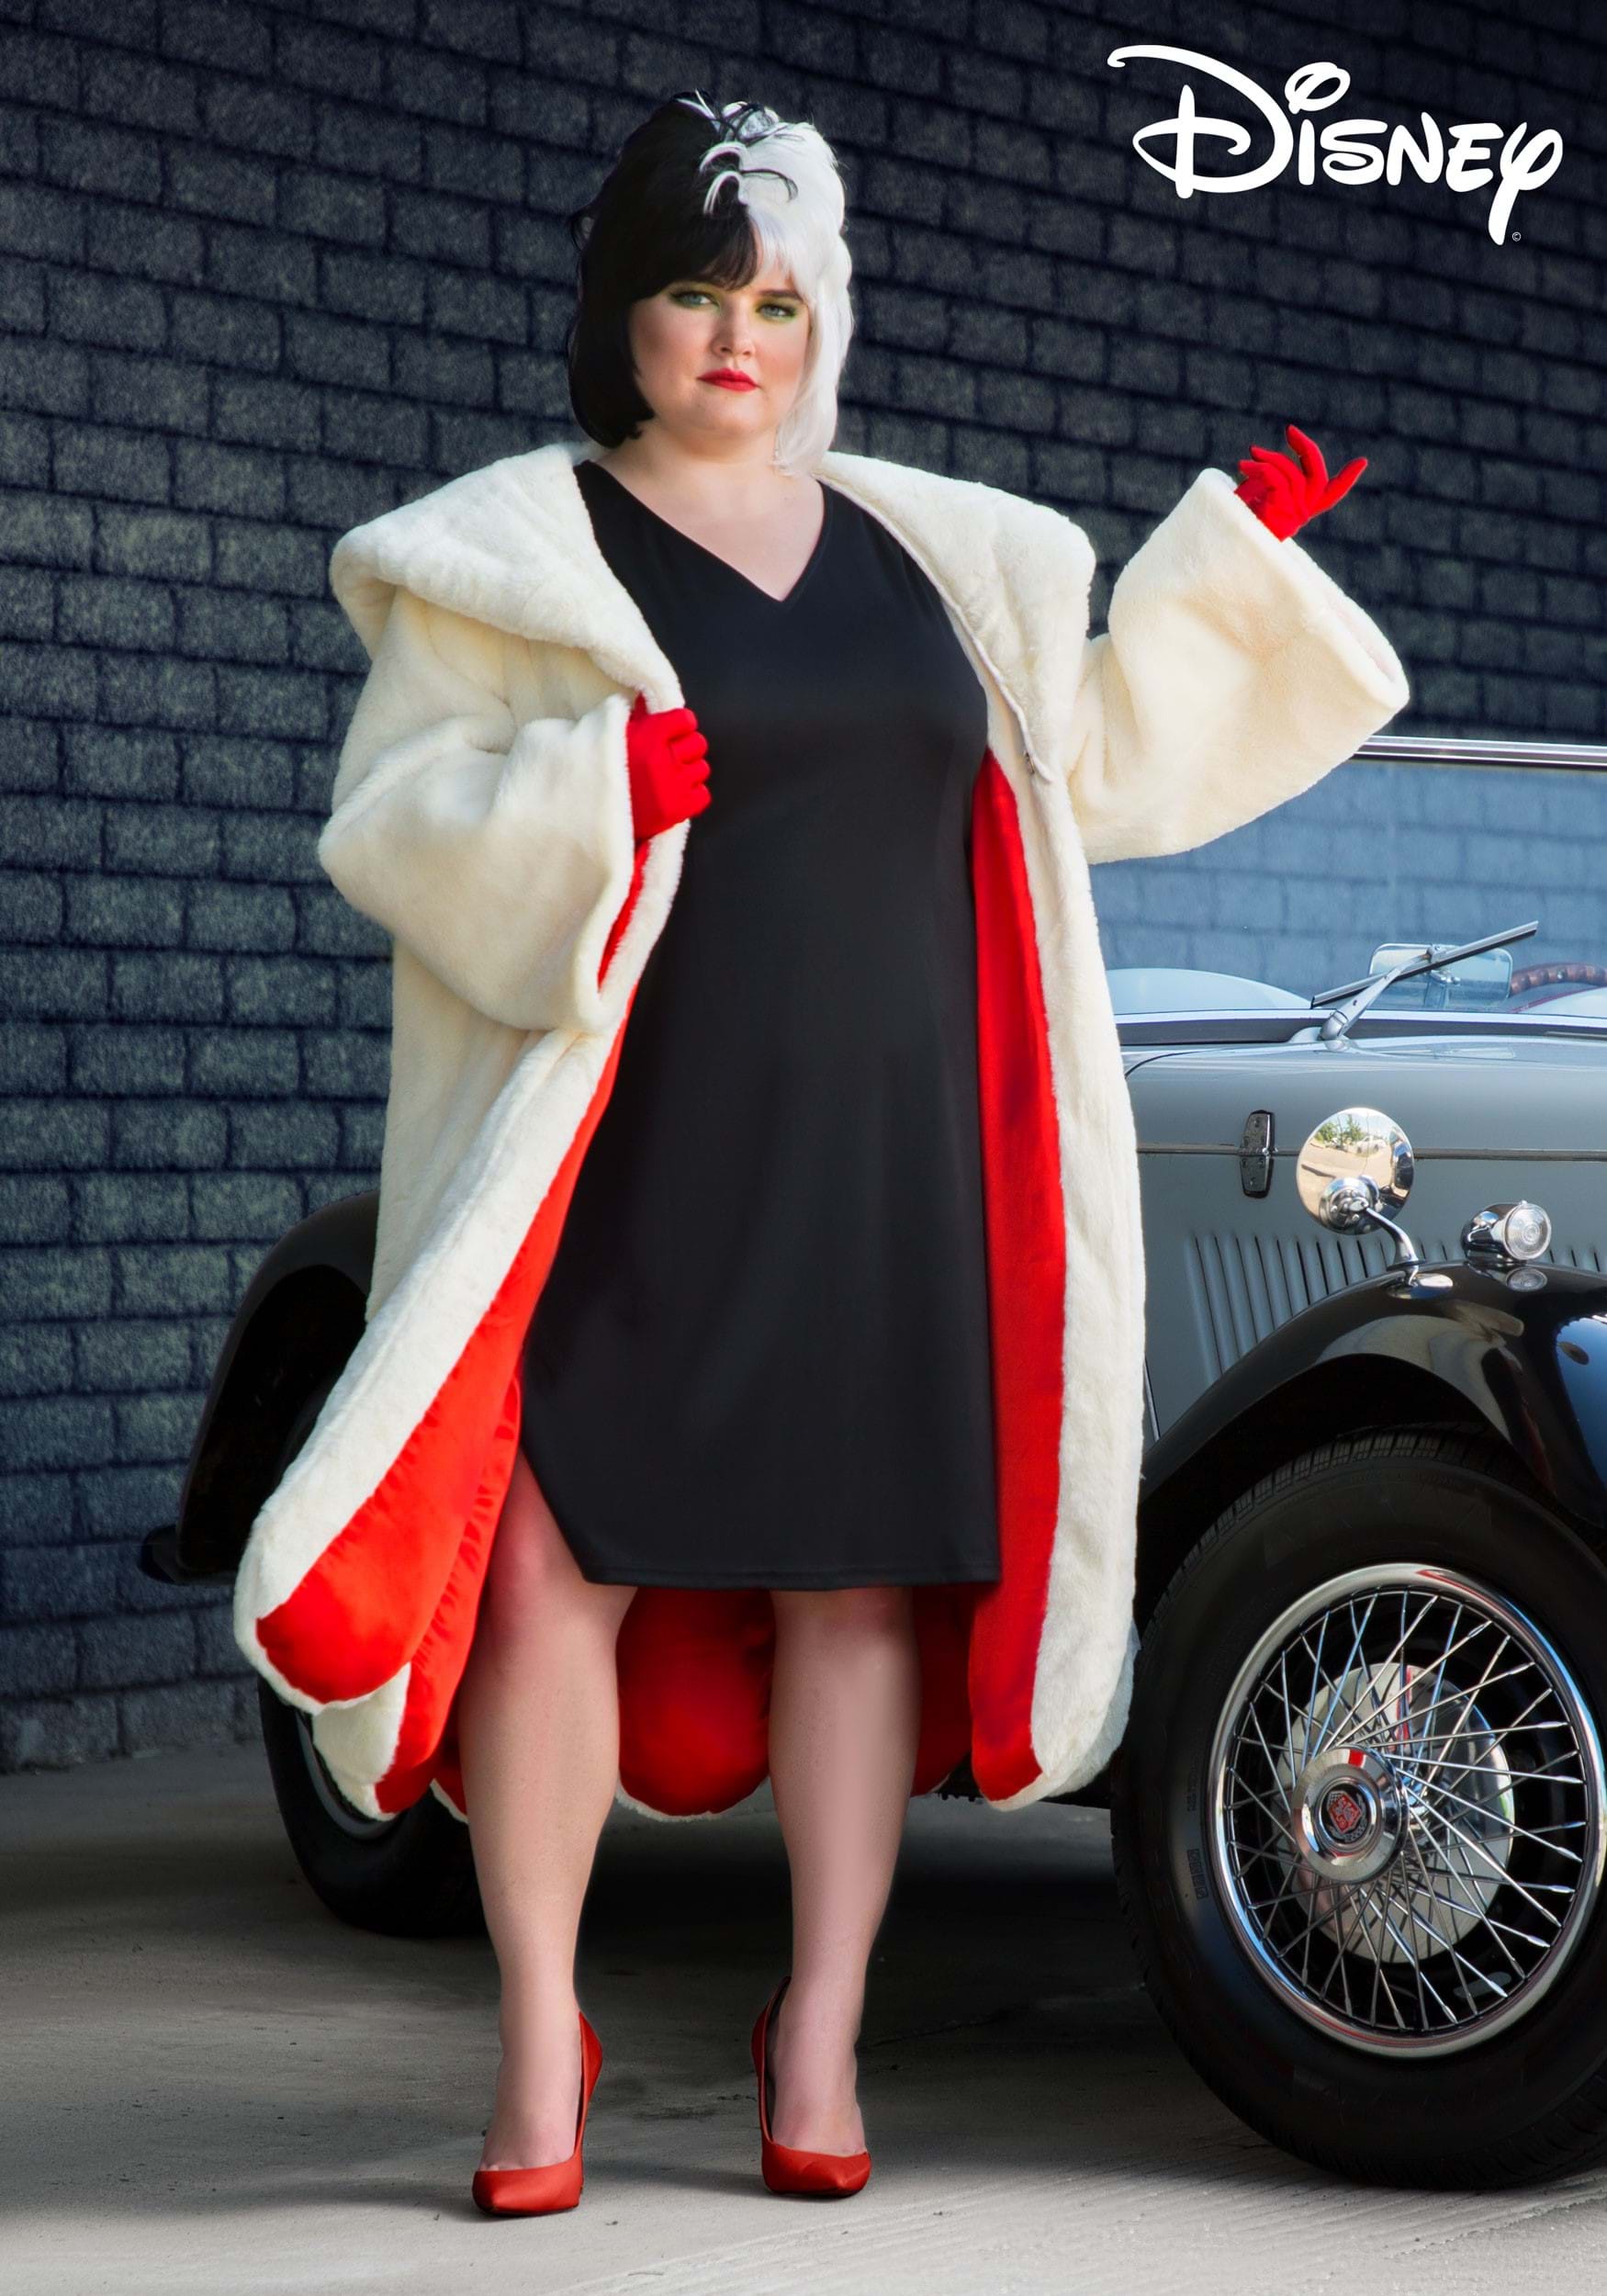 Women's Deluxe Cruella De Vil Coat Plus Size Costume